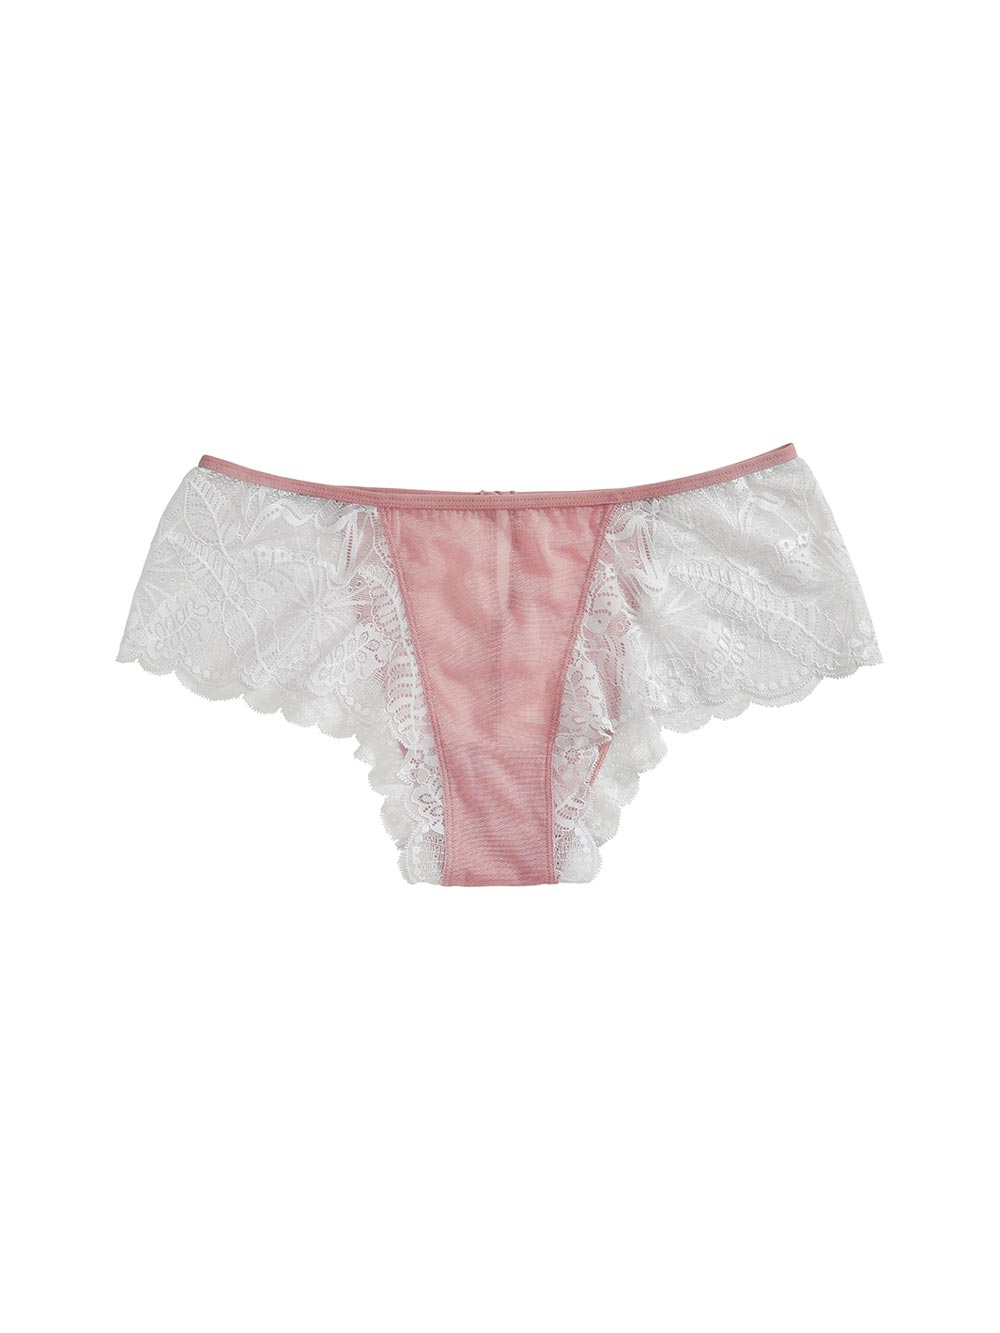 Lace Detail Comfort Panty, Panties